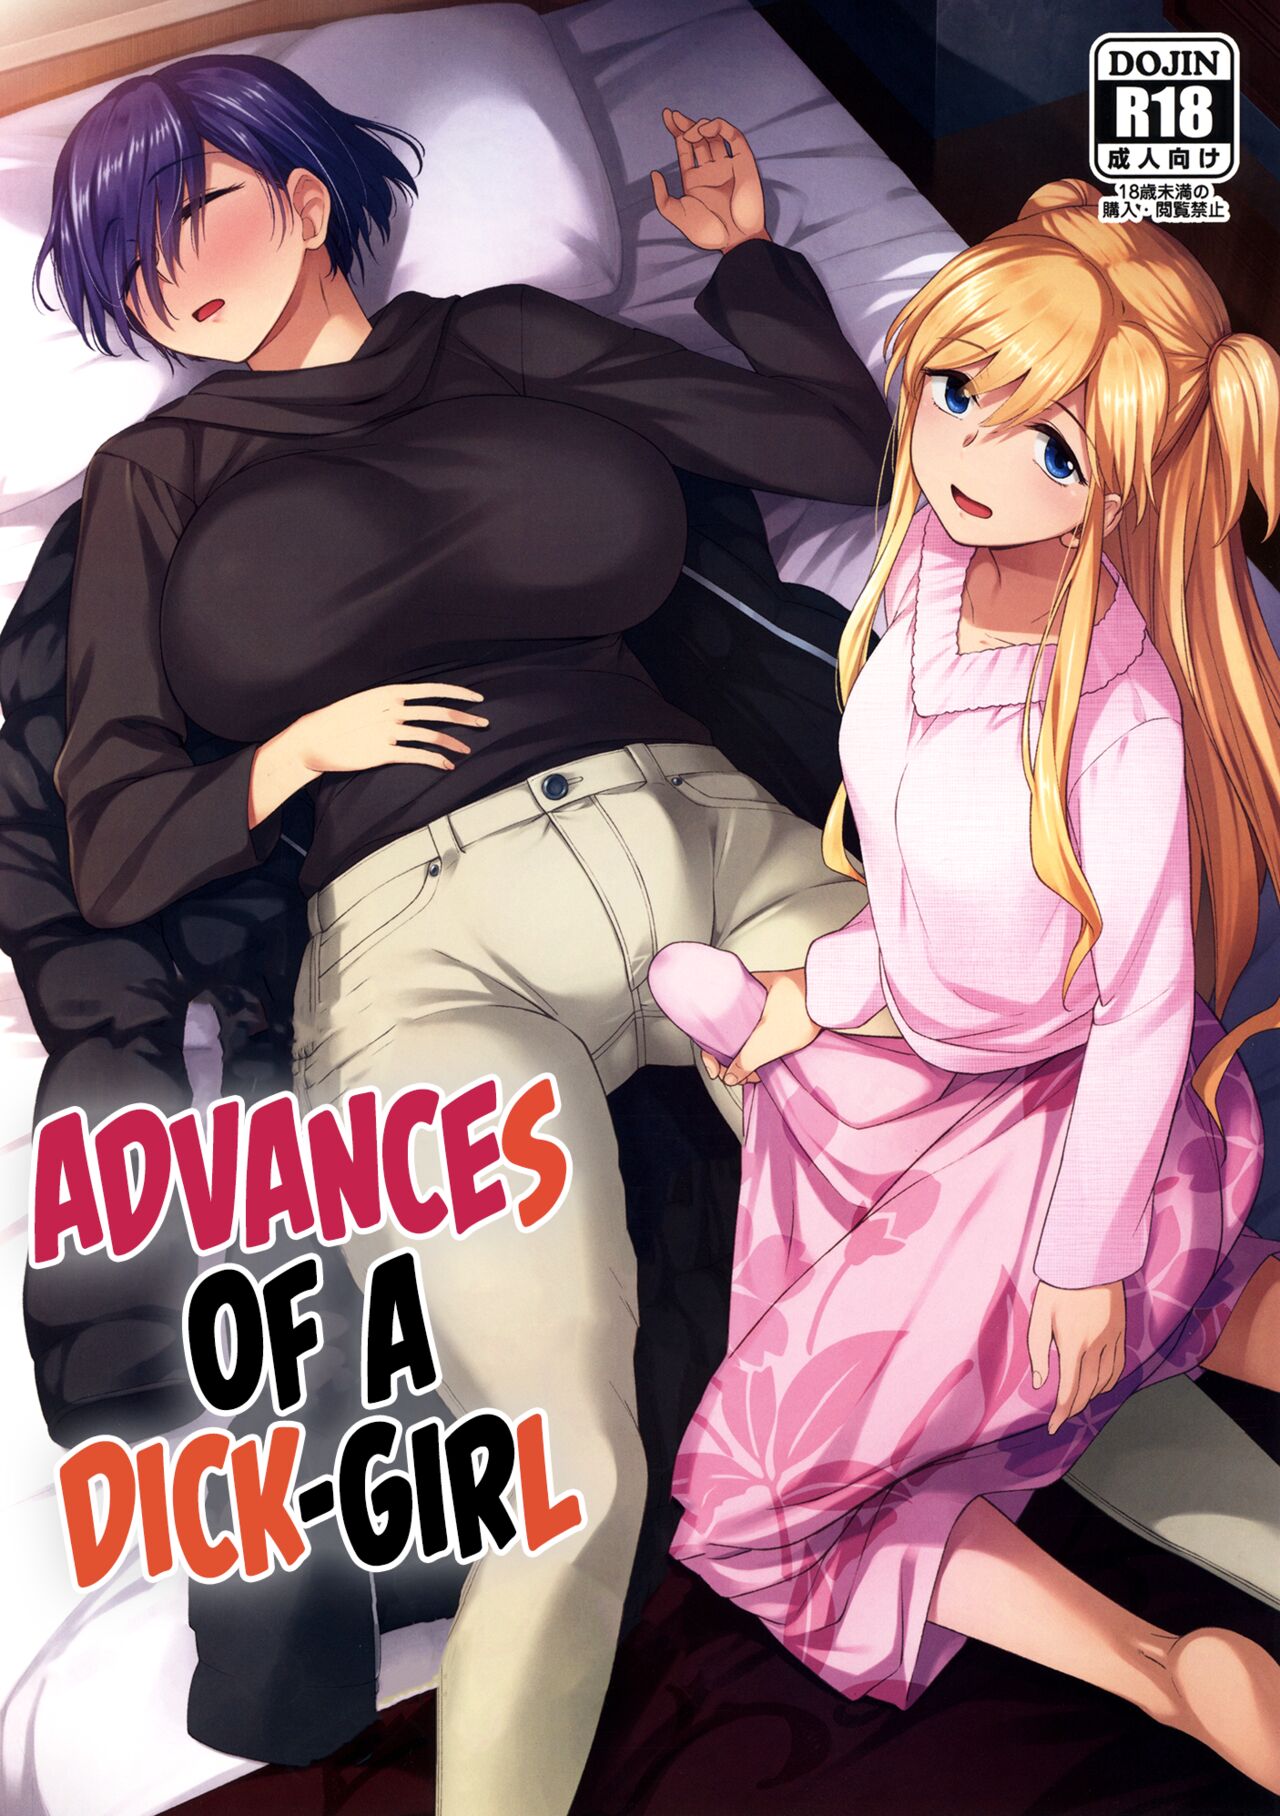 Anime girls with dicks porn